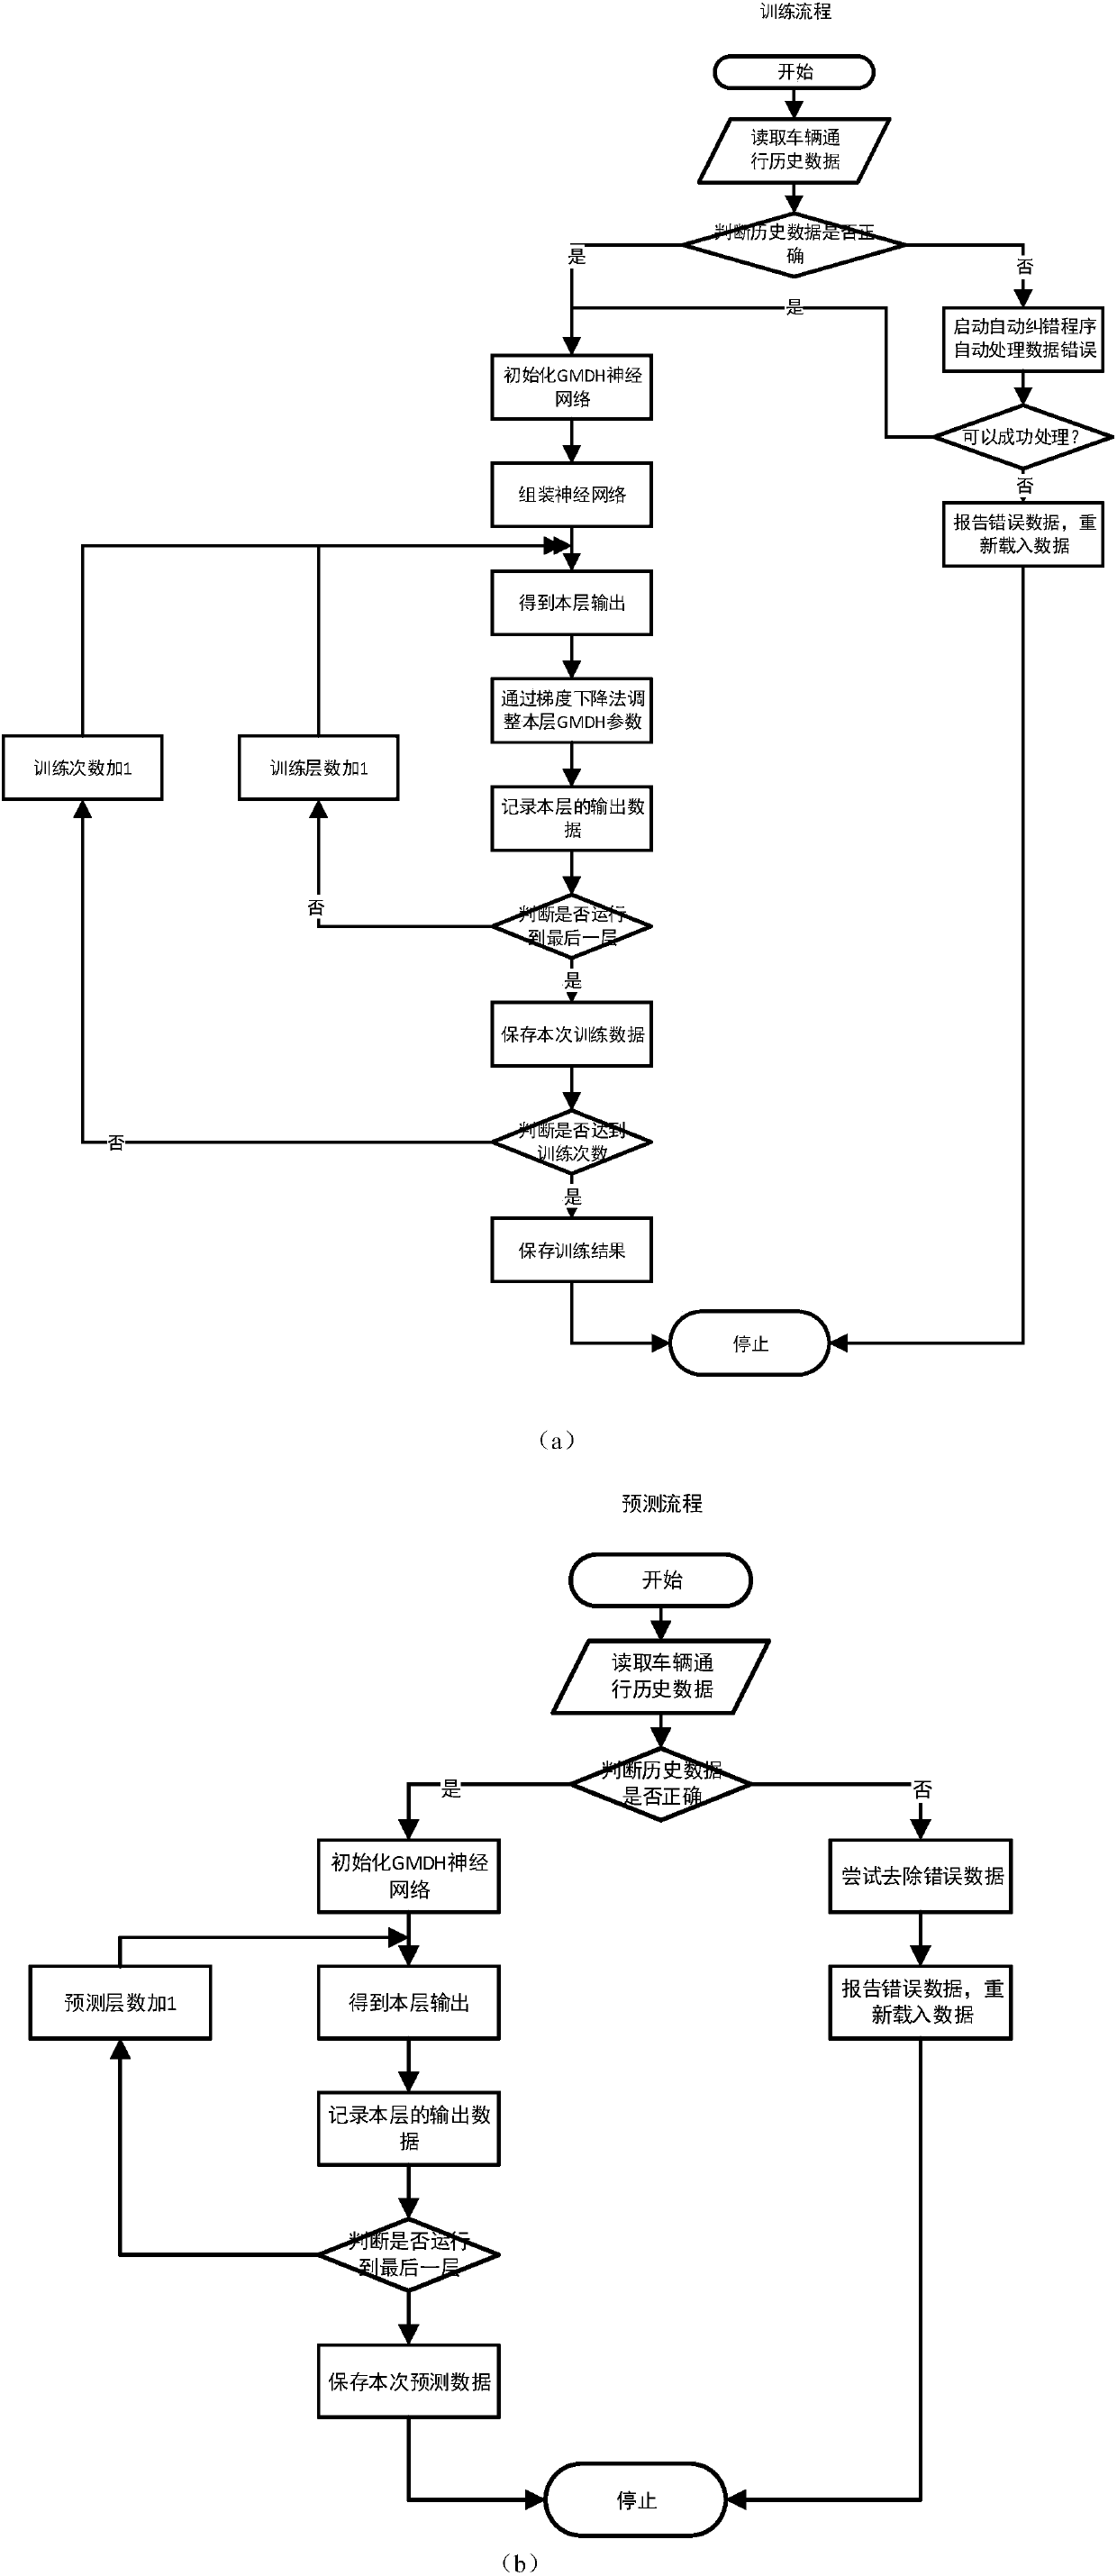 Traffic flow prediction method based on GMDH neural network